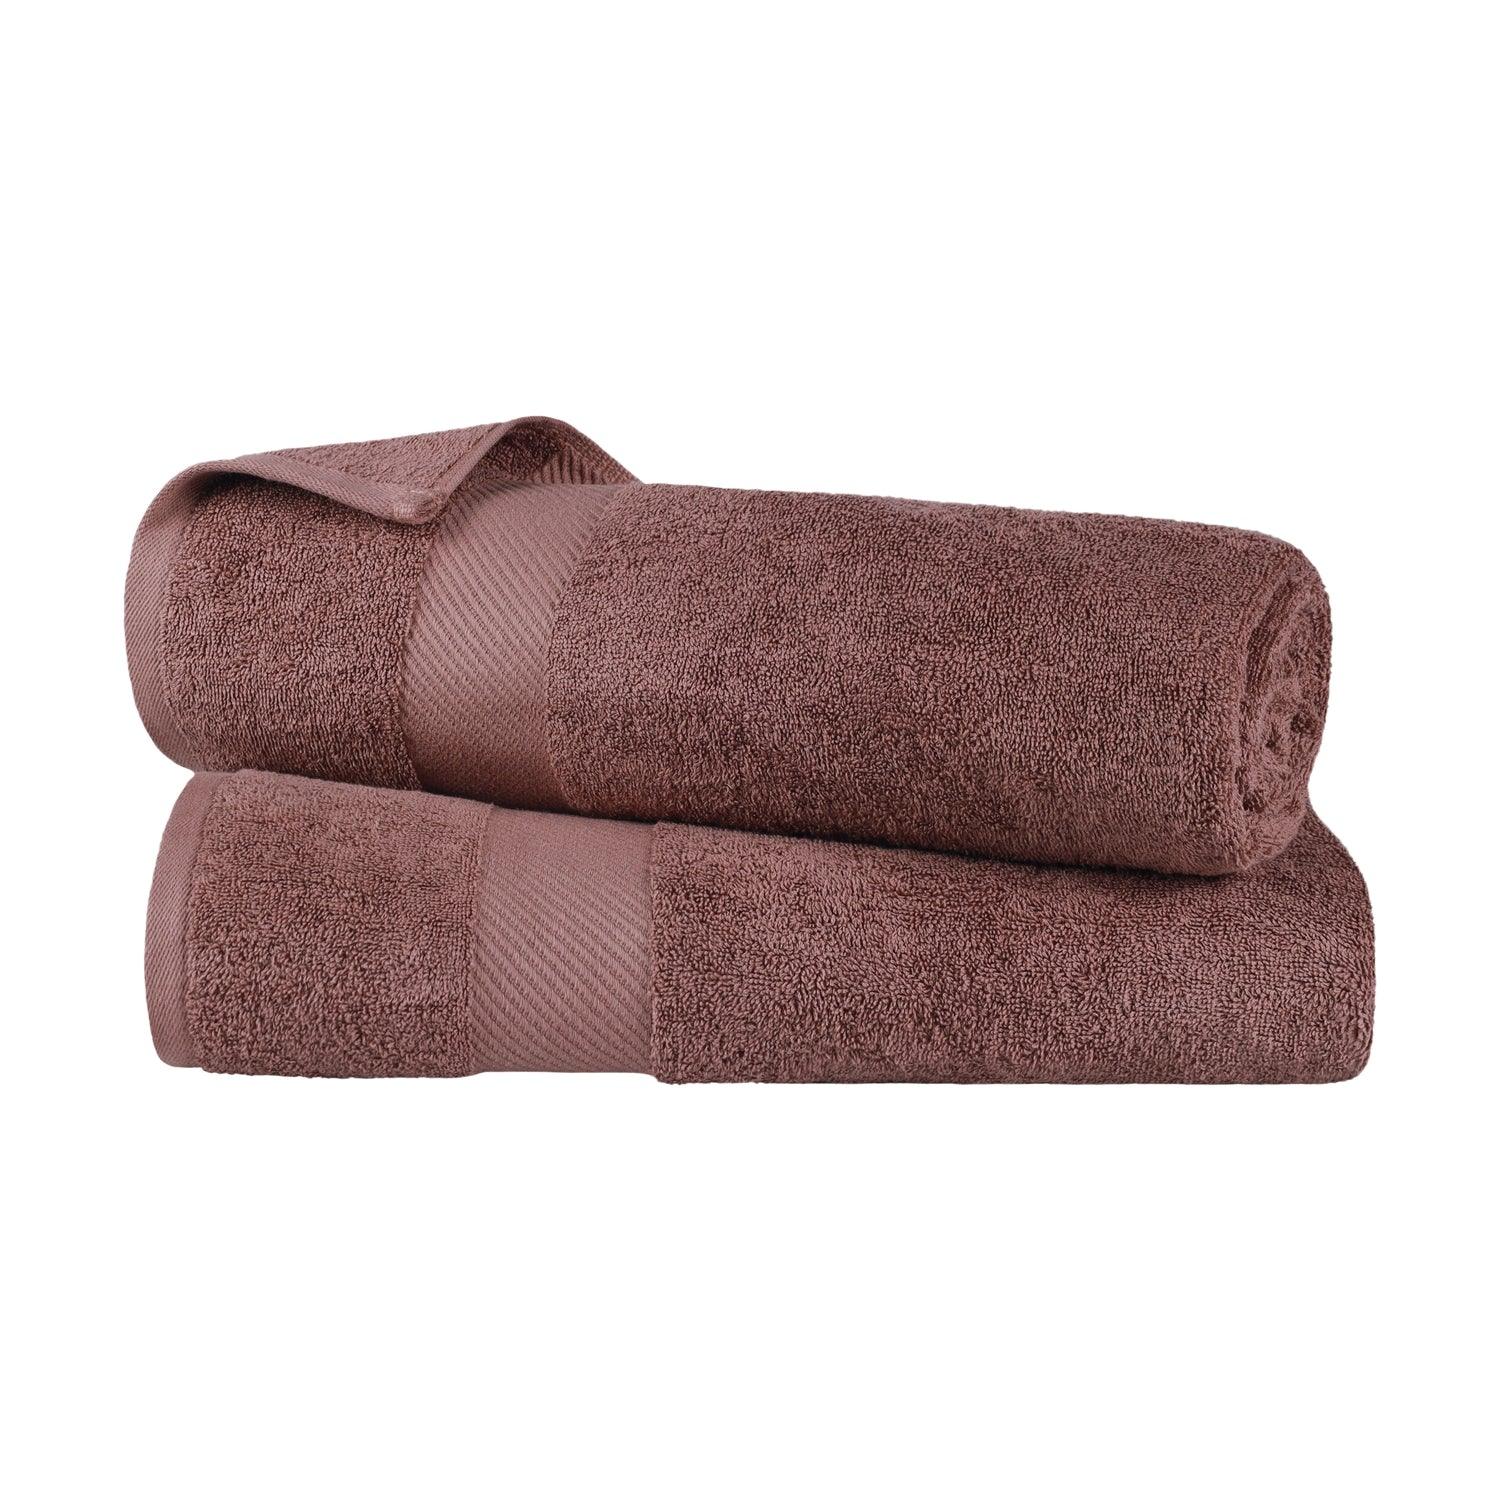 Egyptian Cotton Dobby Border Medium Weight 2 Piece Bath Sheet Set - Sedona